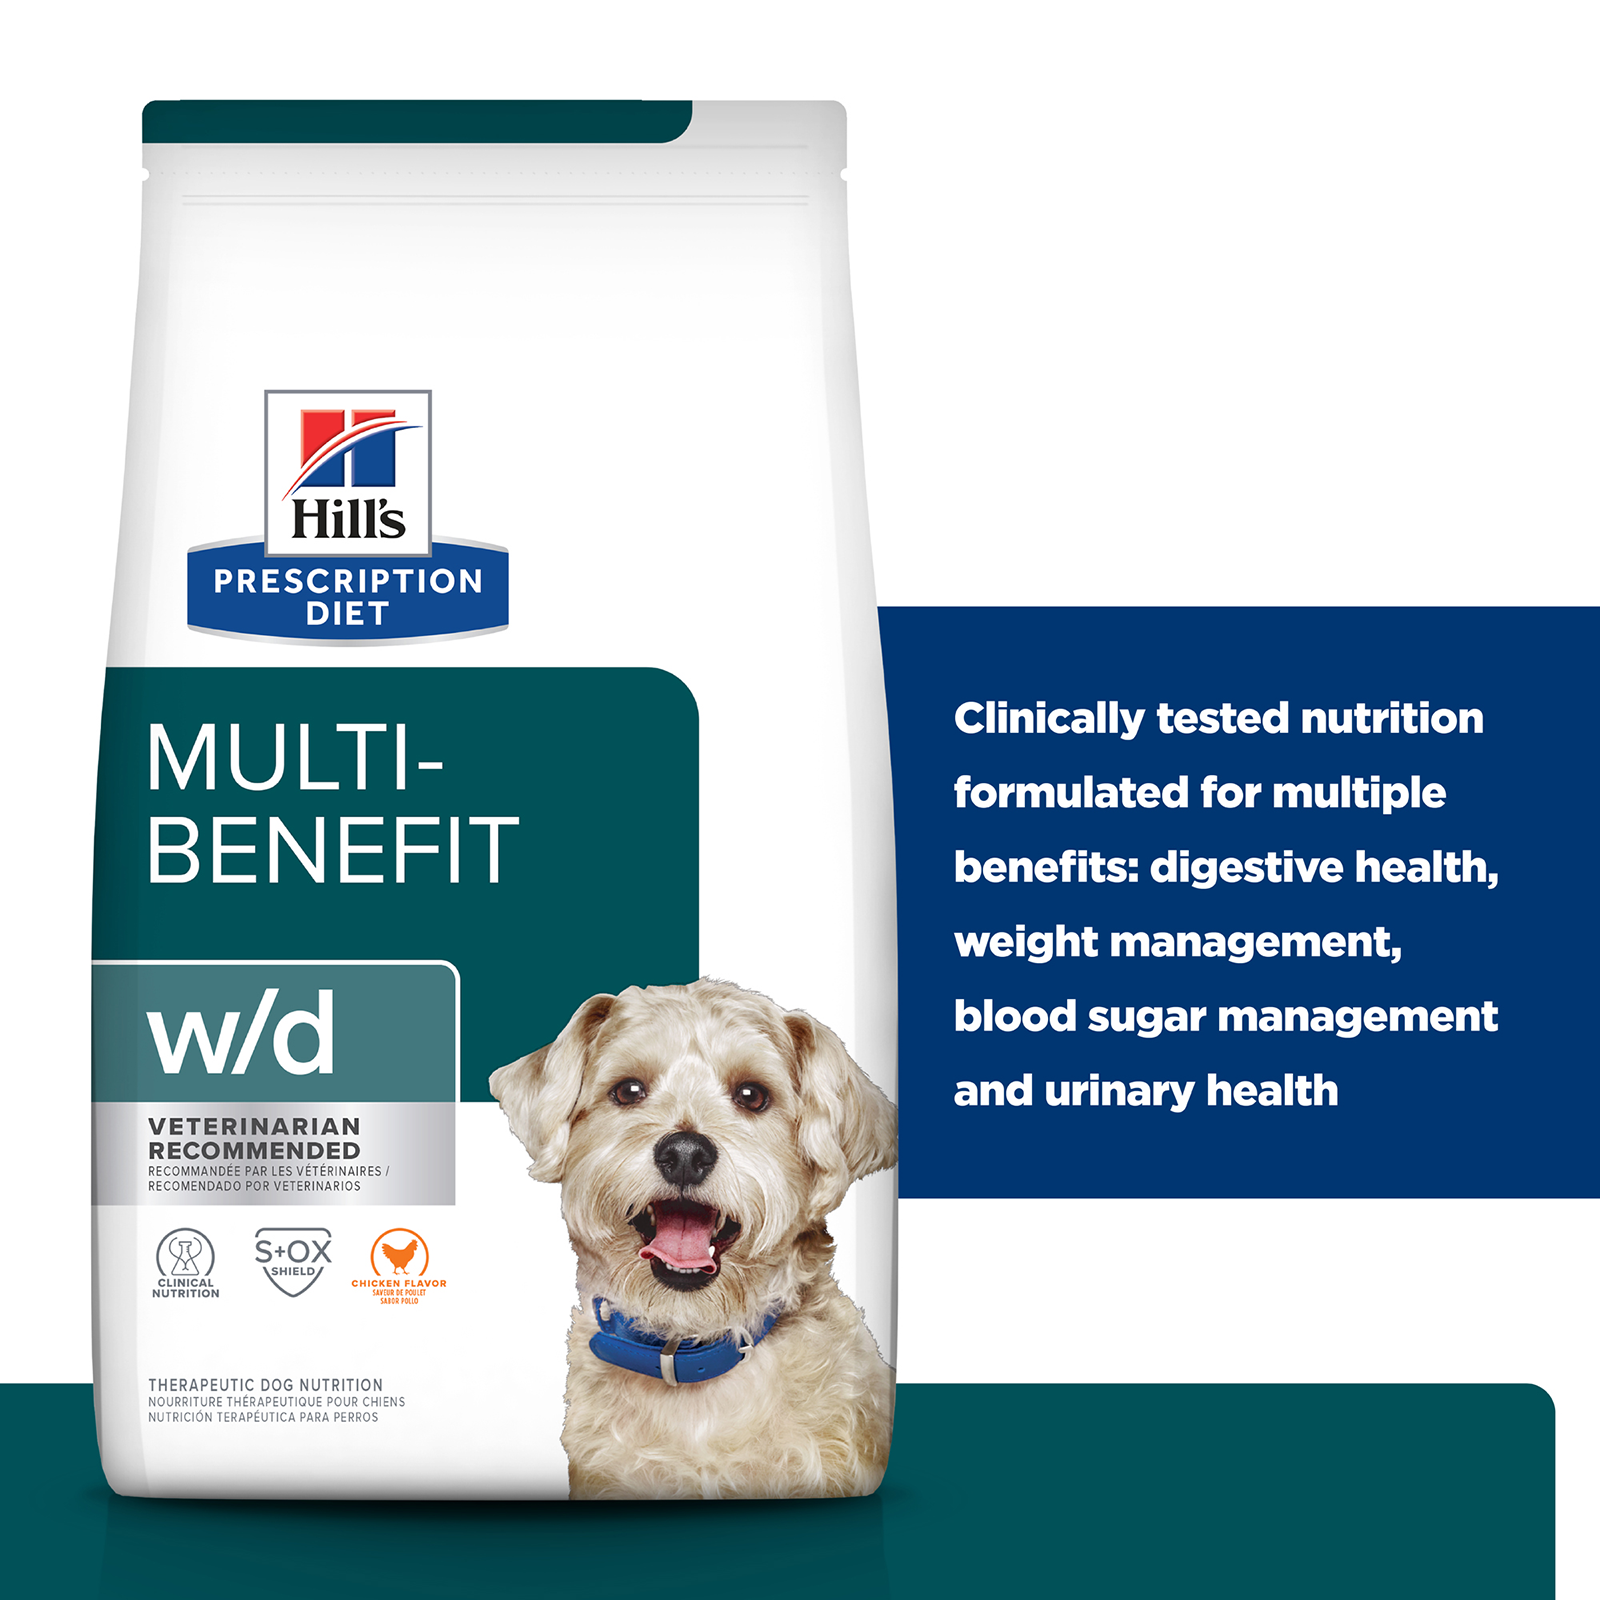 Hill's Prescription Diet Dog Food w/d Multi Benefit